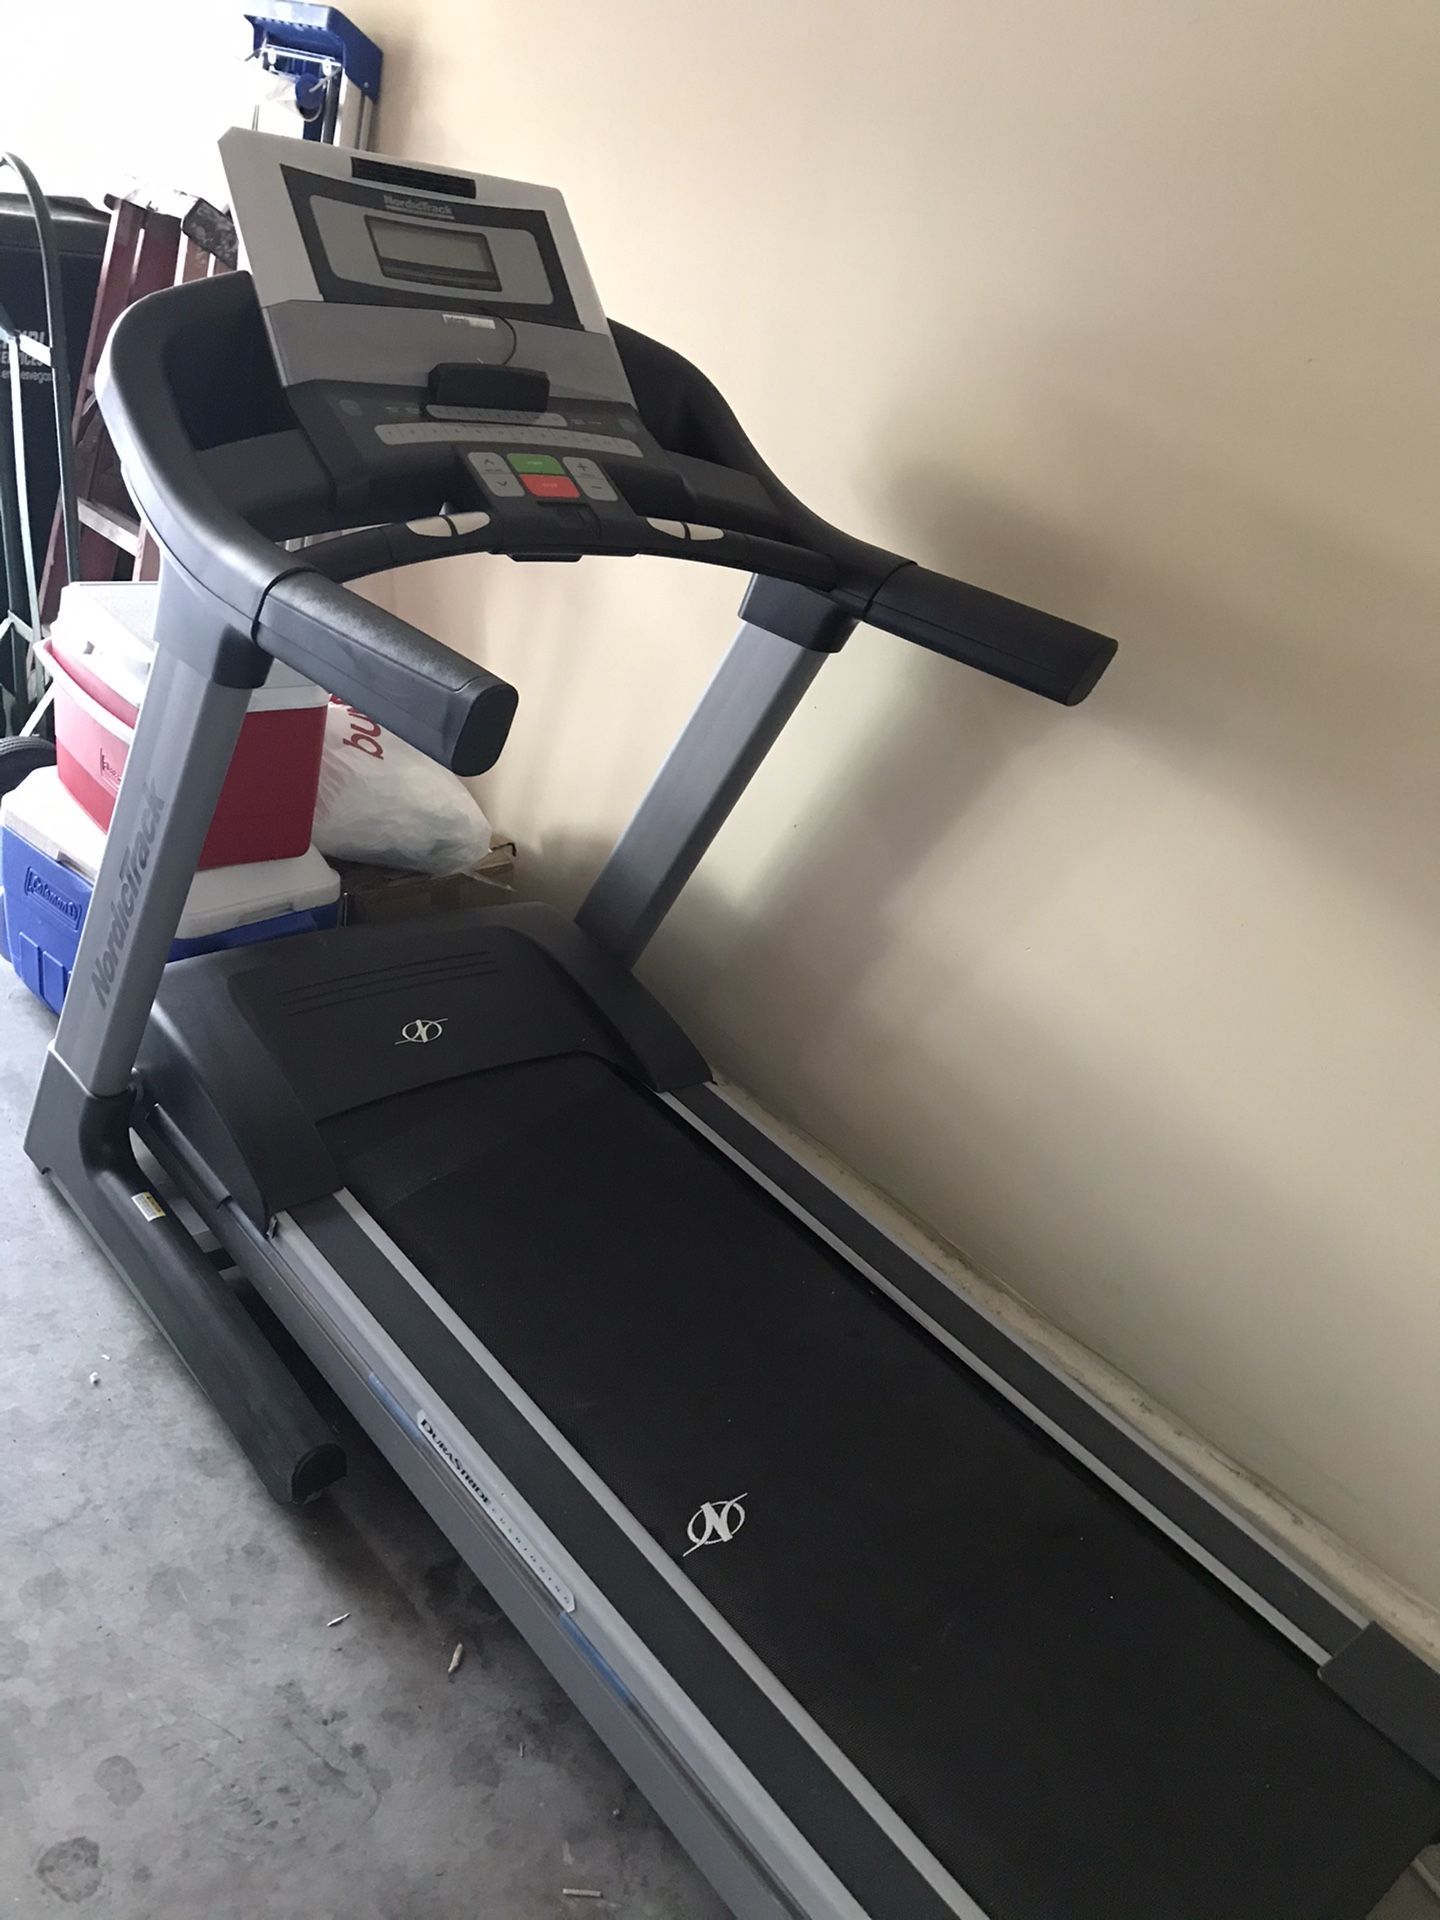 Commertial treadmill Nordic track